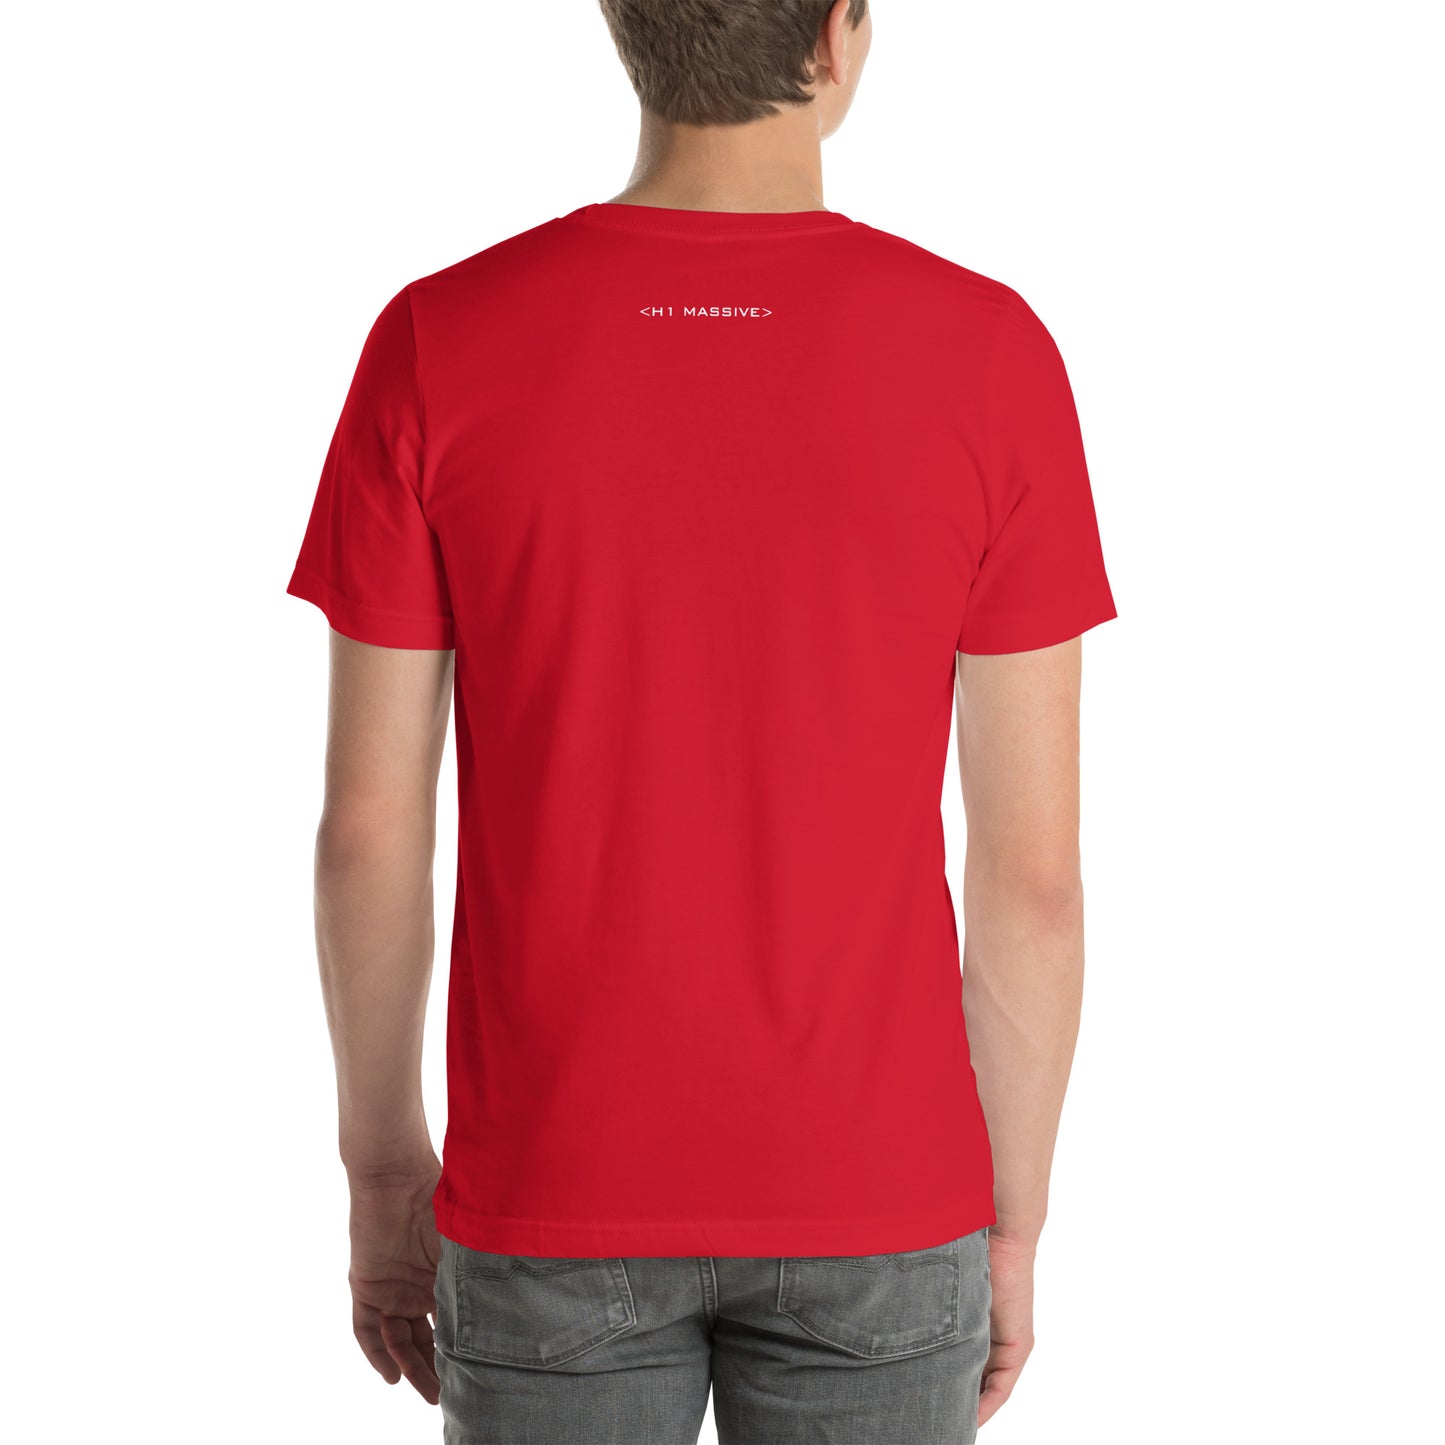 CARV.R - Unisex t-shirt - Deflect (After Death RMX)